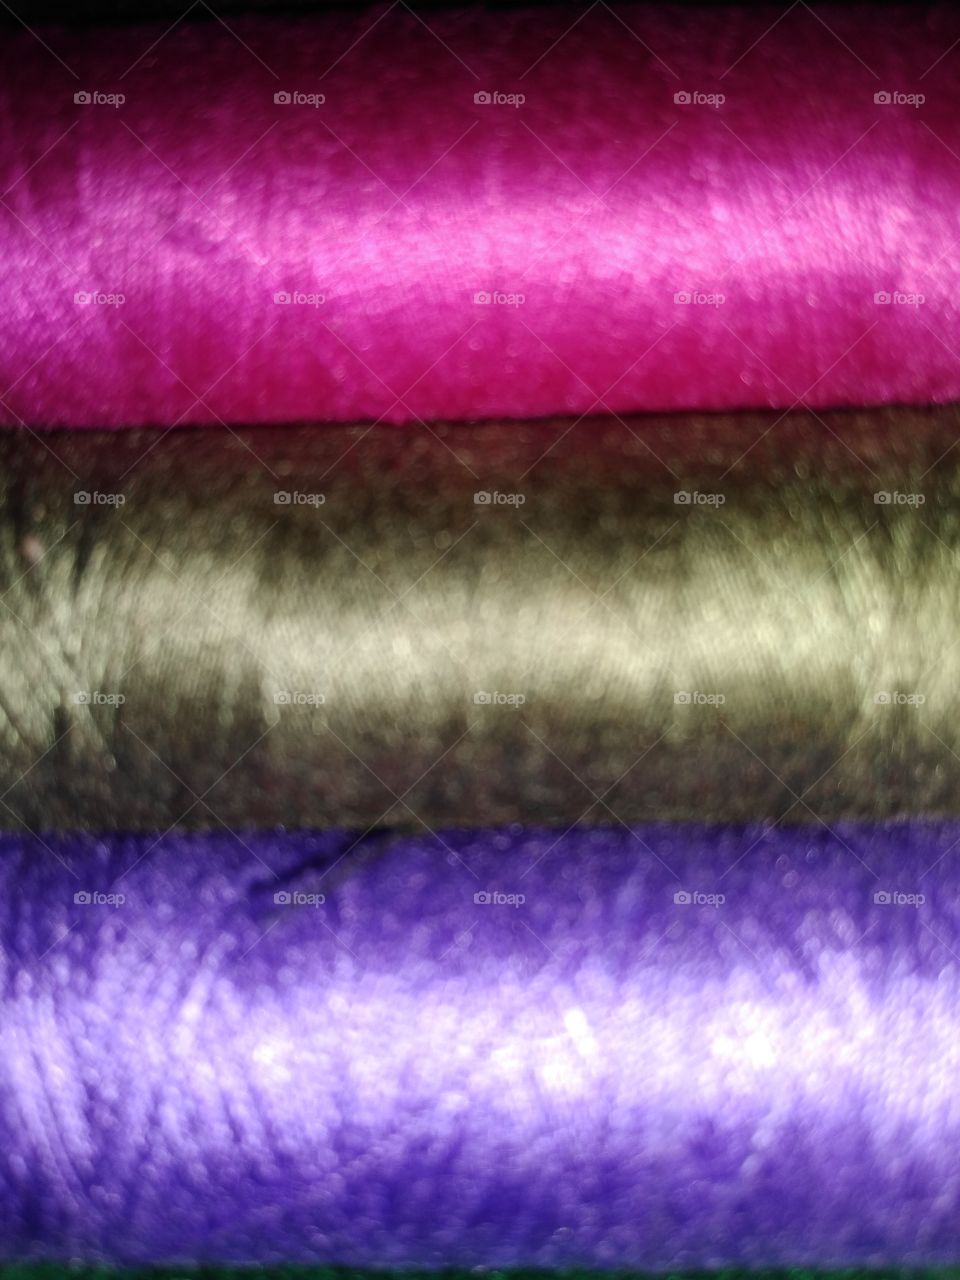 colour threads